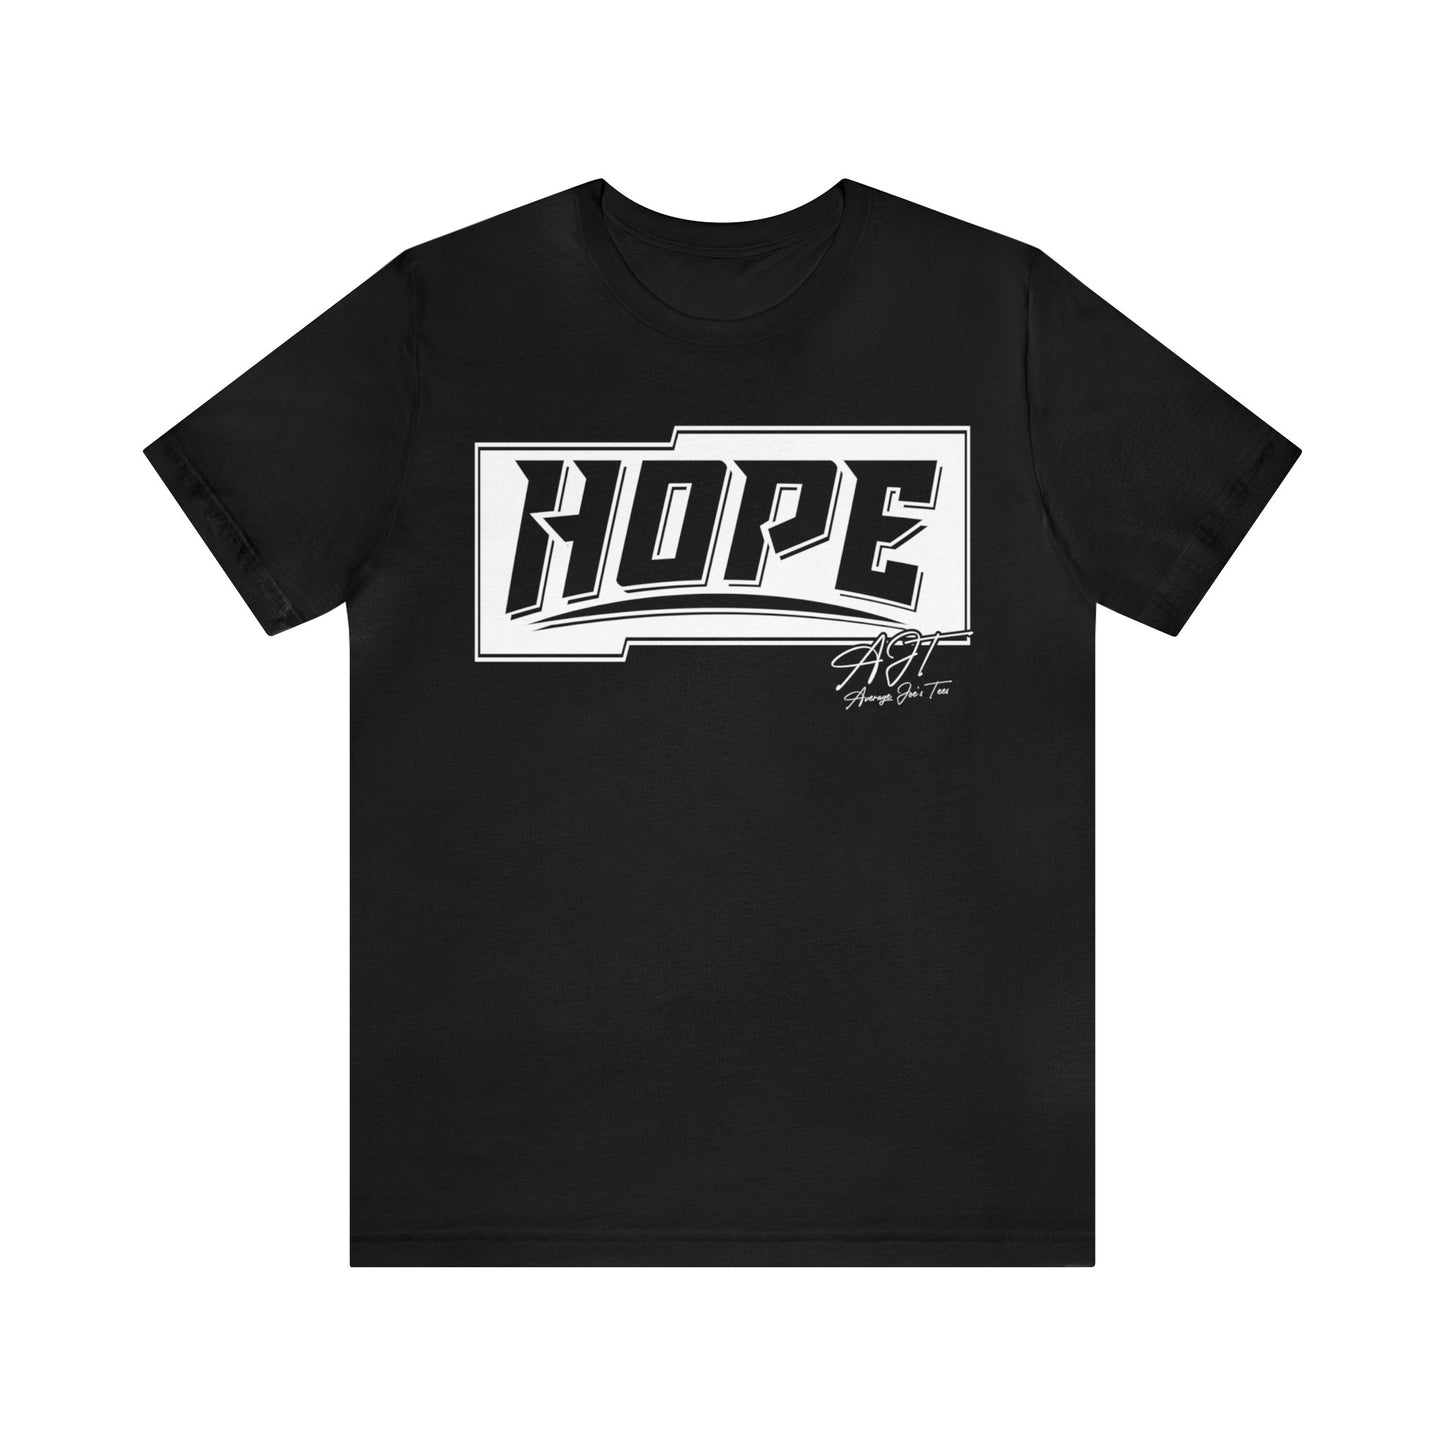 "Hope" Short Sleeve Tee